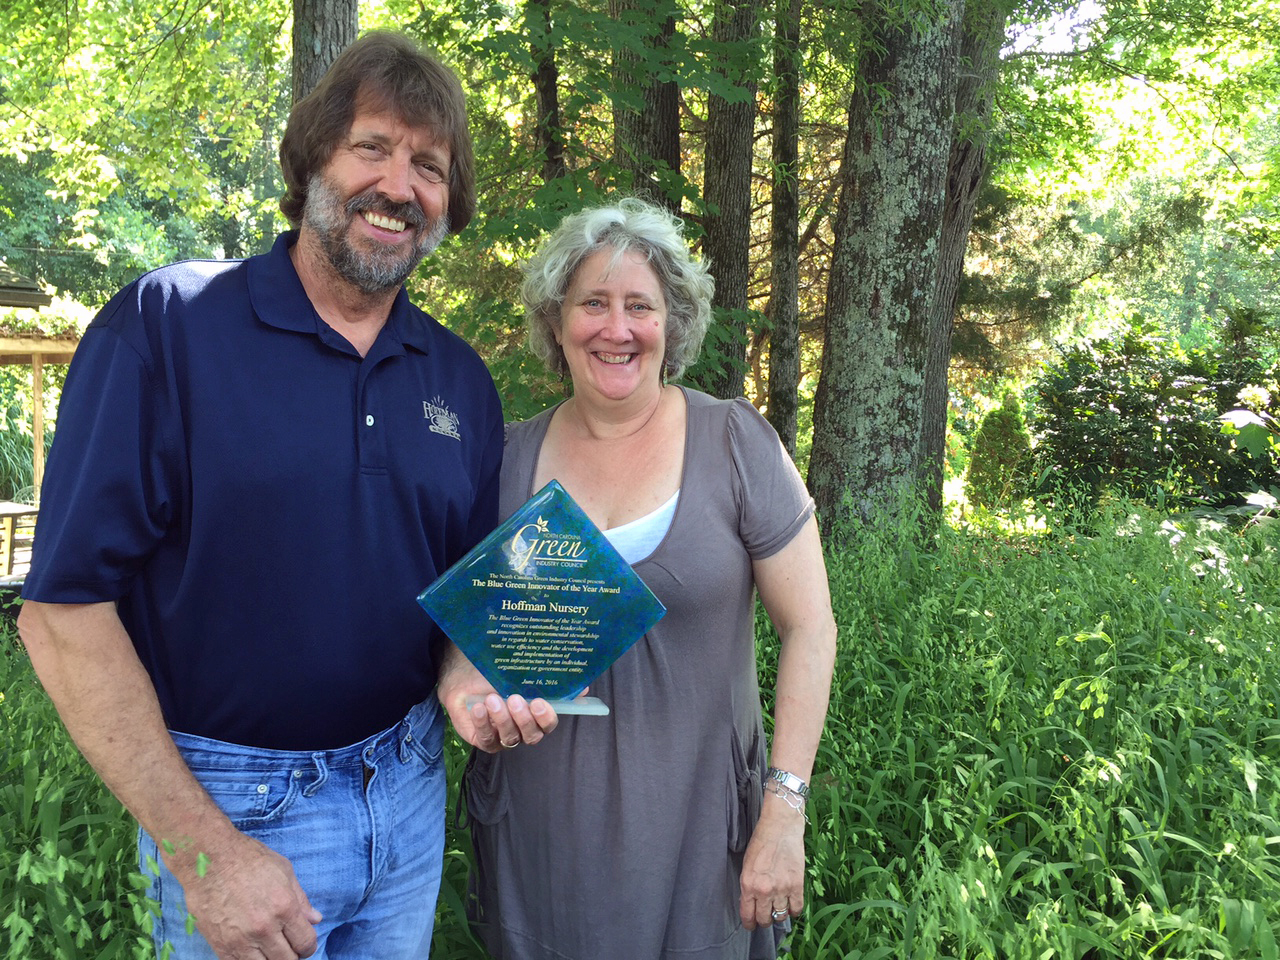 John and Jill Hoffman with the NC GIC's Blue-Green Innovator Award